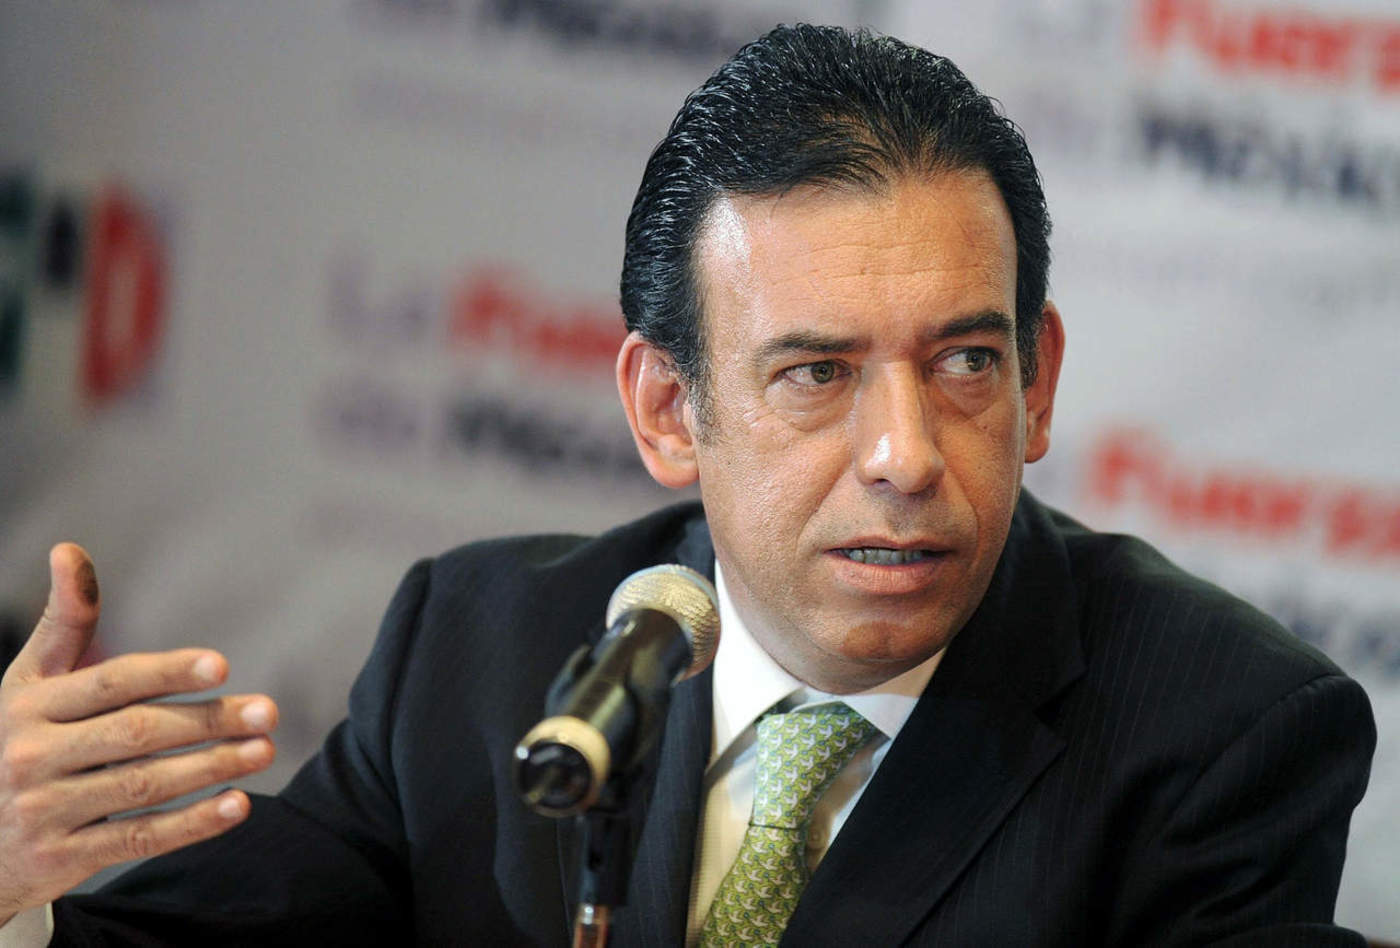 El exgobernador de Coahuila, Humberto Moreira, rechazó haber acusado a Juan Manuel Muñoz Luévano. (ARCHIVO) 